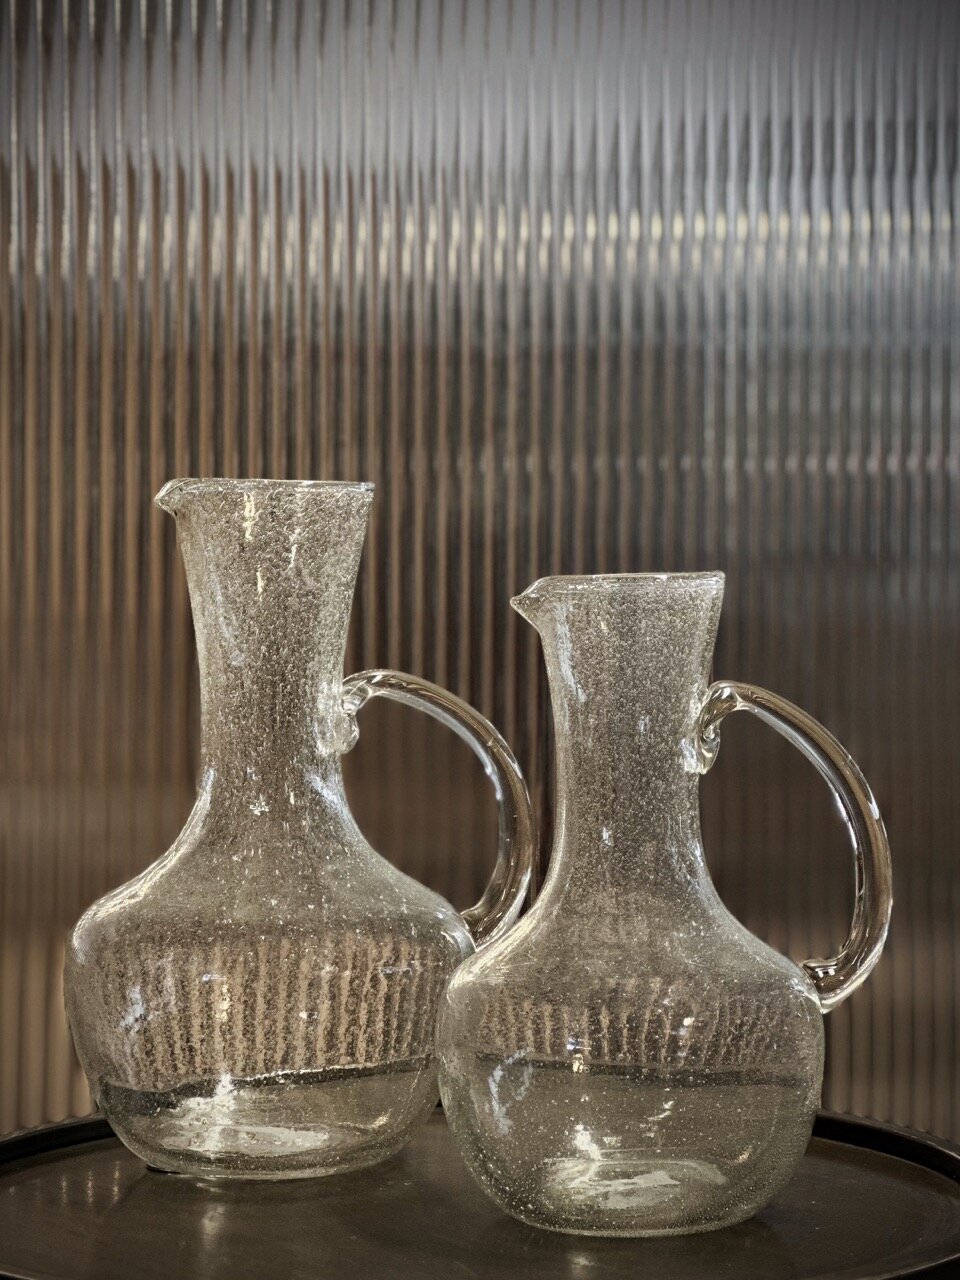 RIVIERA medium glass pitcher, clear bubble glass